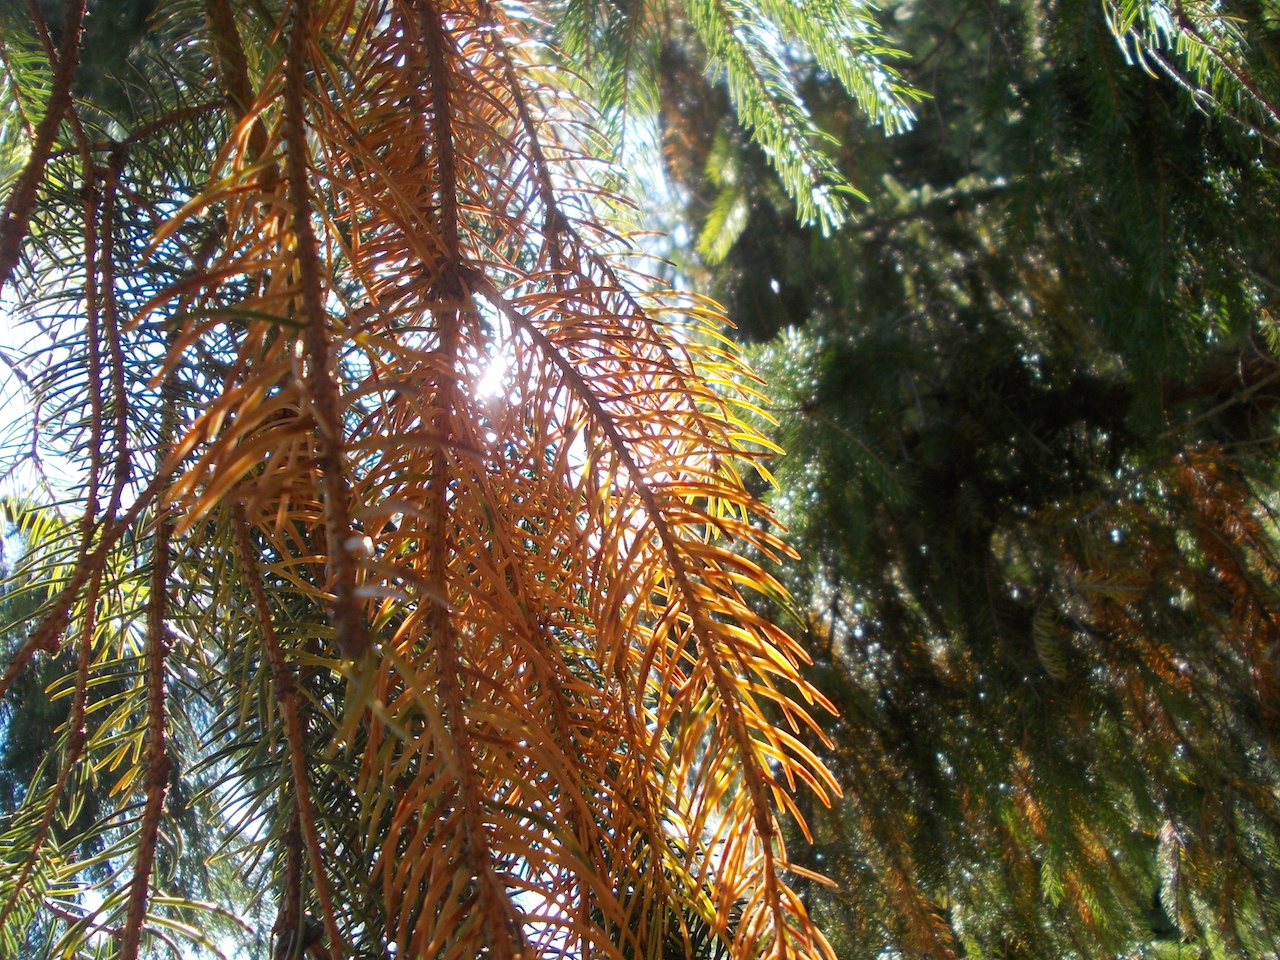 The Bondar Challenge Honourable Mention: Emerald – “A Pine Tree” by Logan Delaney.